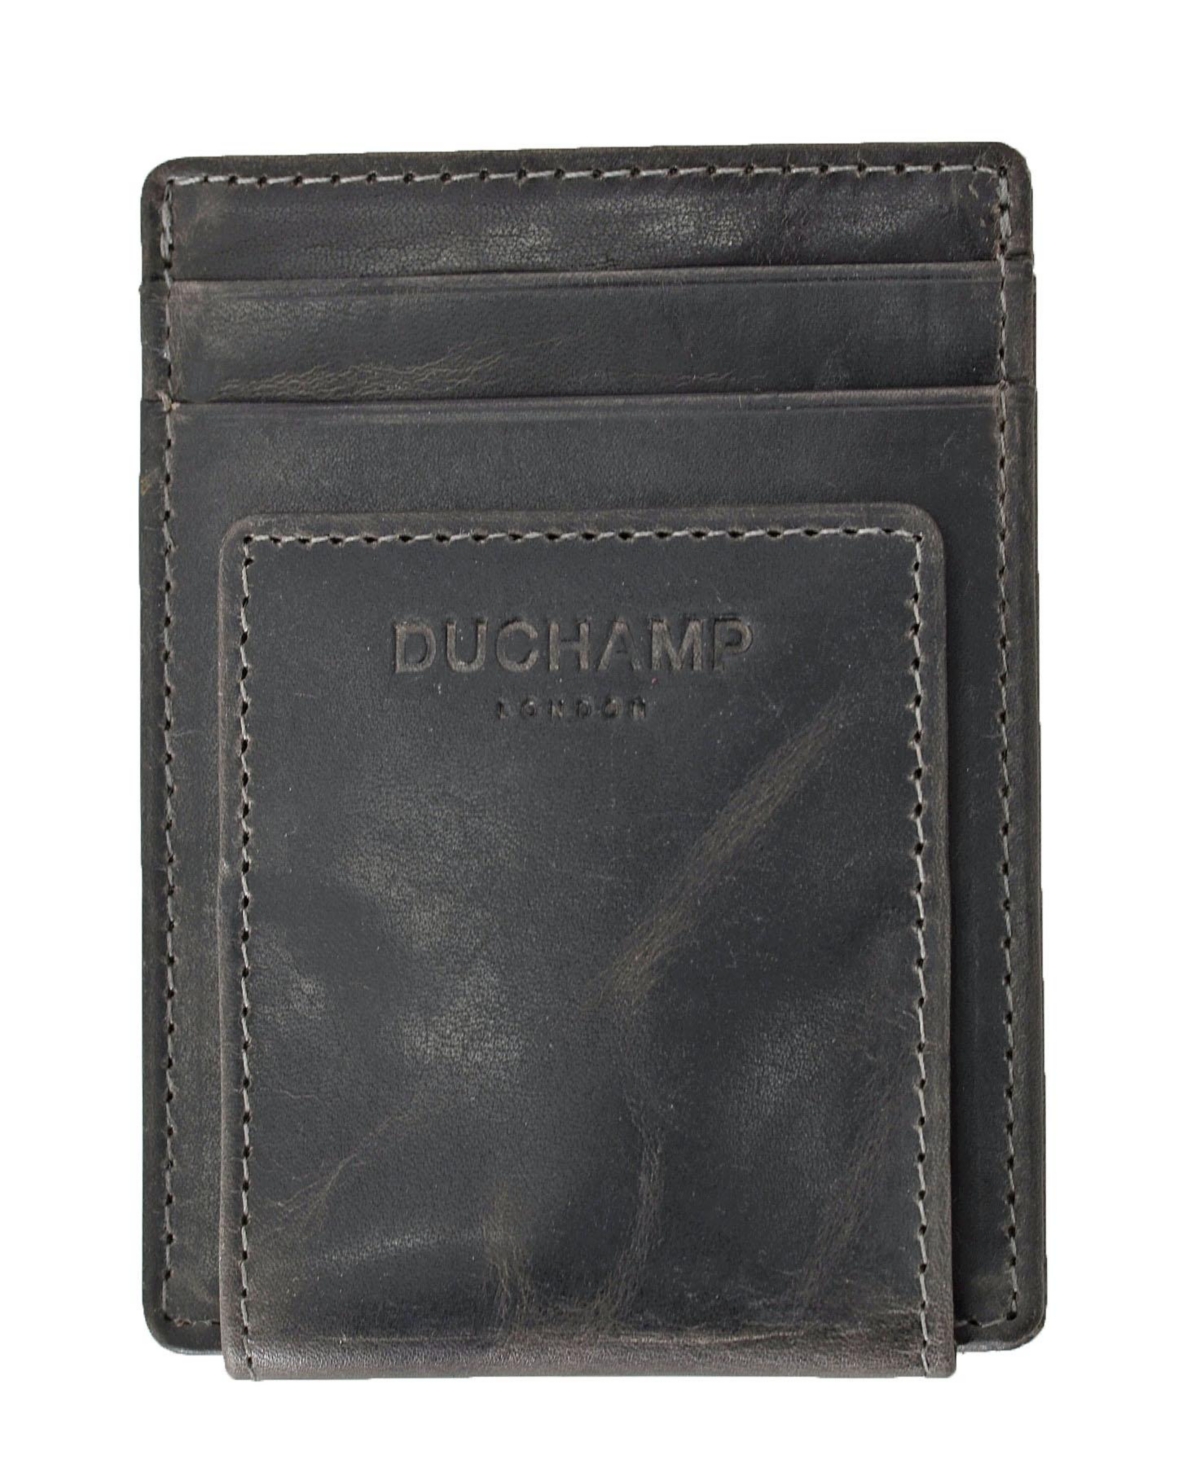 Duchamp London Men's Front Pocket with Magnetic Money Clip Wallet